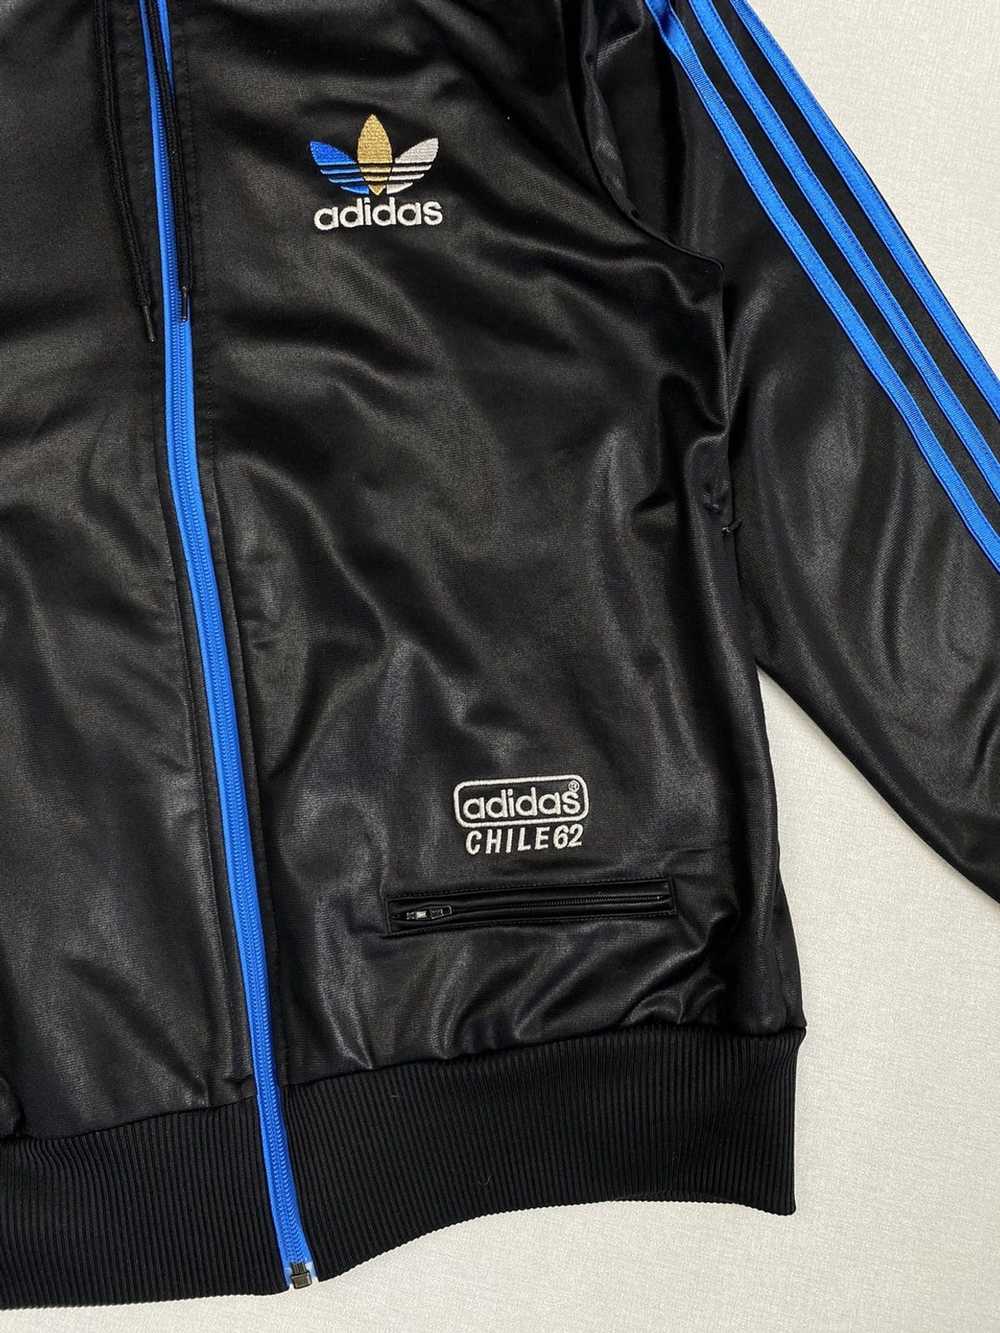 Adidas Mens Adidas Chile 62 Track Top Jacket size… - image 3